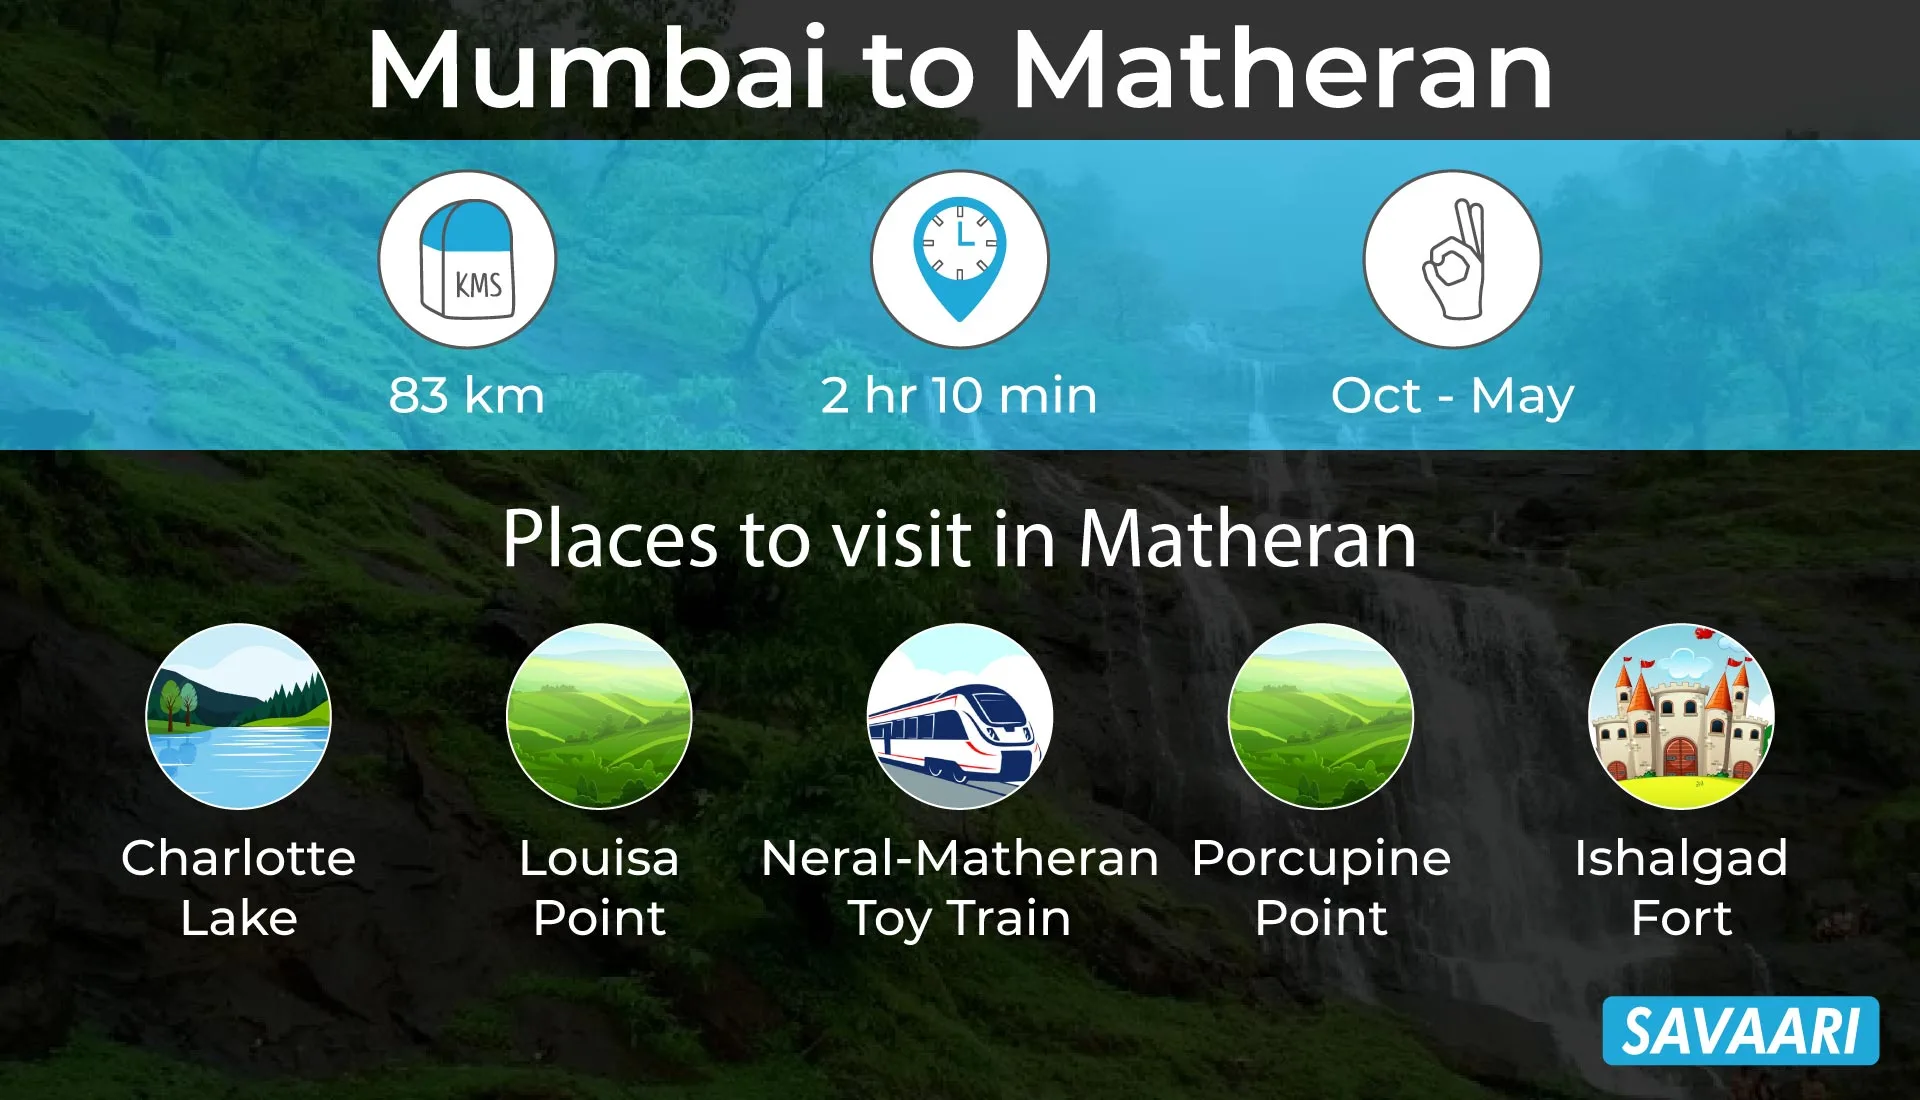 Mumbai to Matheran scenic road trip